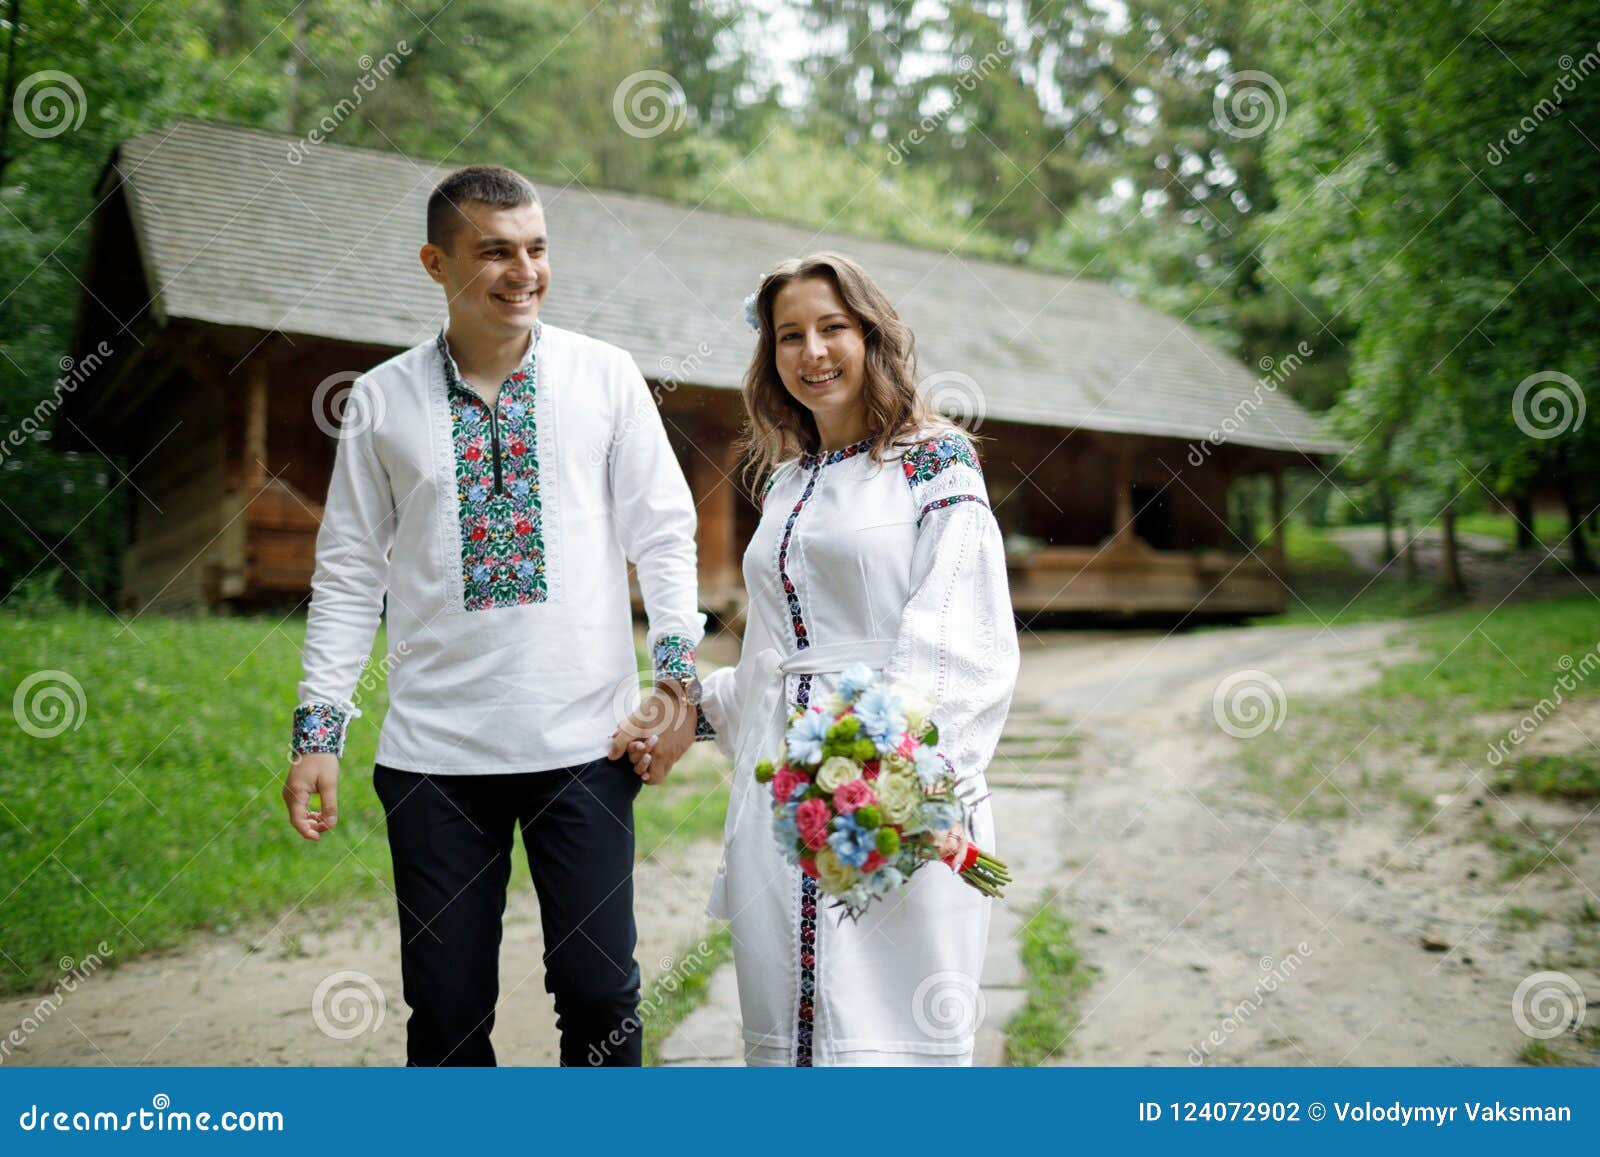 https://thumbs.dreamstime.com/z/beautiful-bride-groom-ukrainian-style-standing-w-lovely-couple-ukrainian-national-costumes-outdoors-ethnic-124072902.jpg